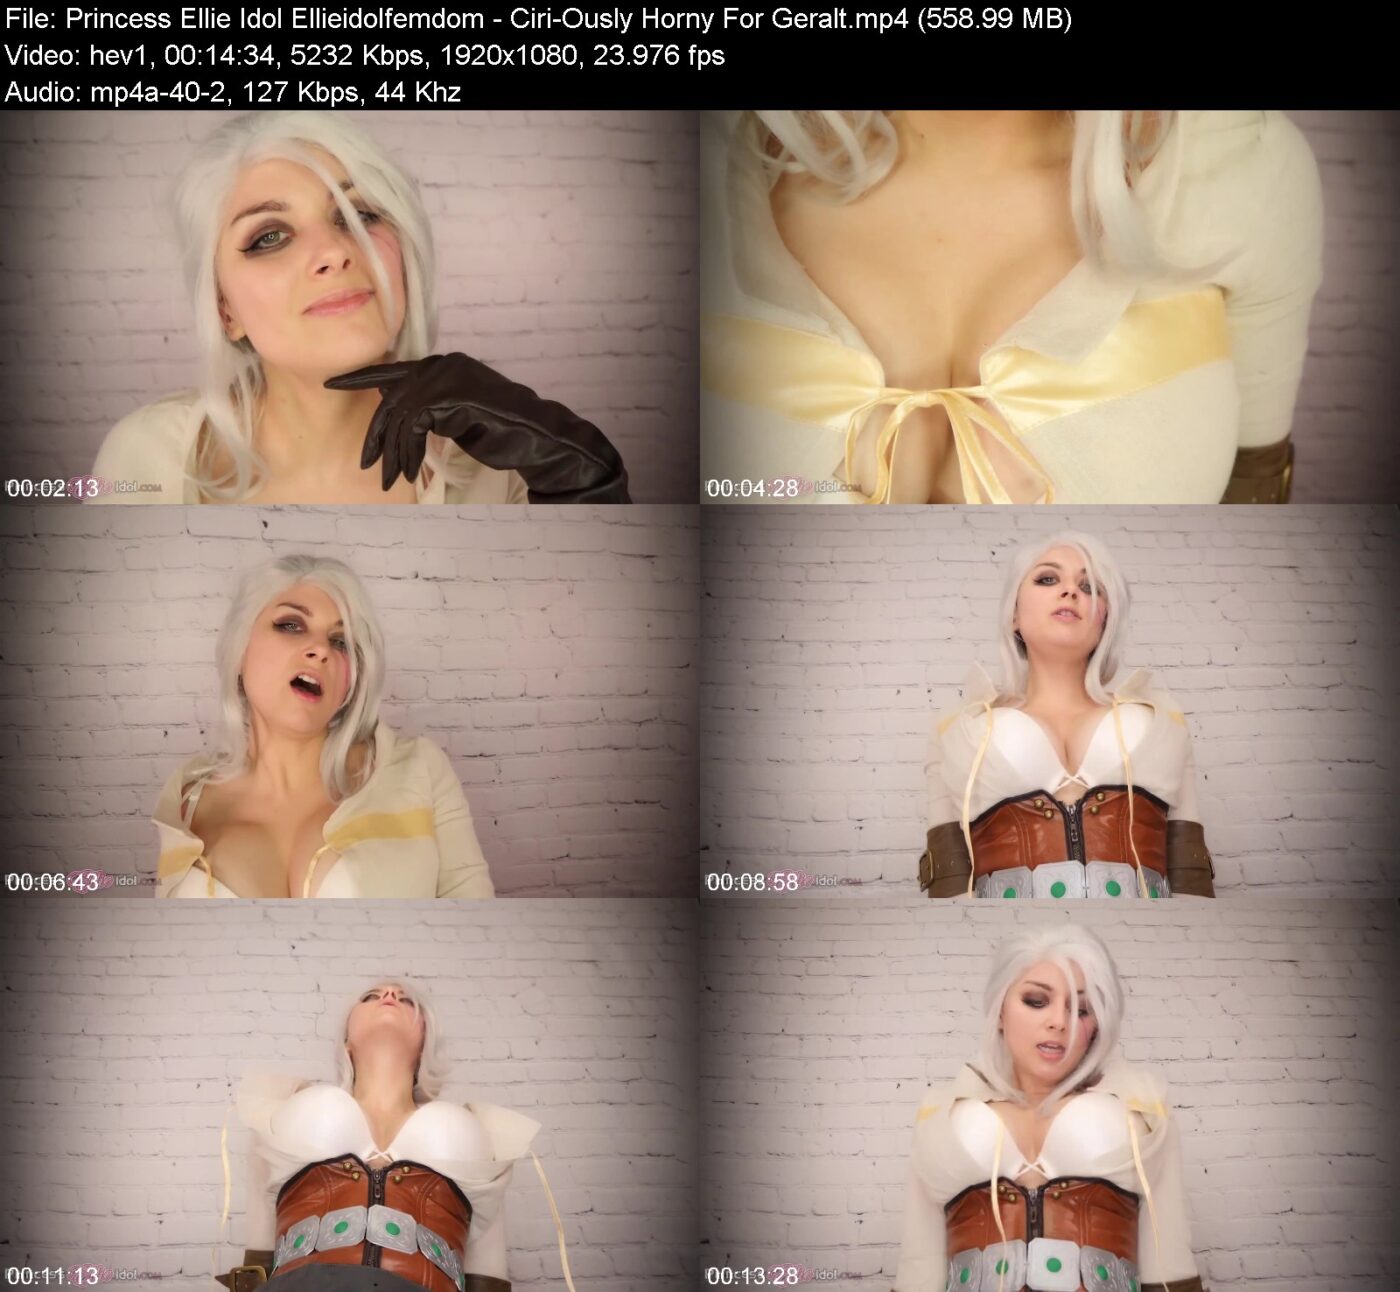 Actress: Princess Ellie Idol Ellieidolfemdom. Title and Studio: Ciri-Ously Horny For Geralt